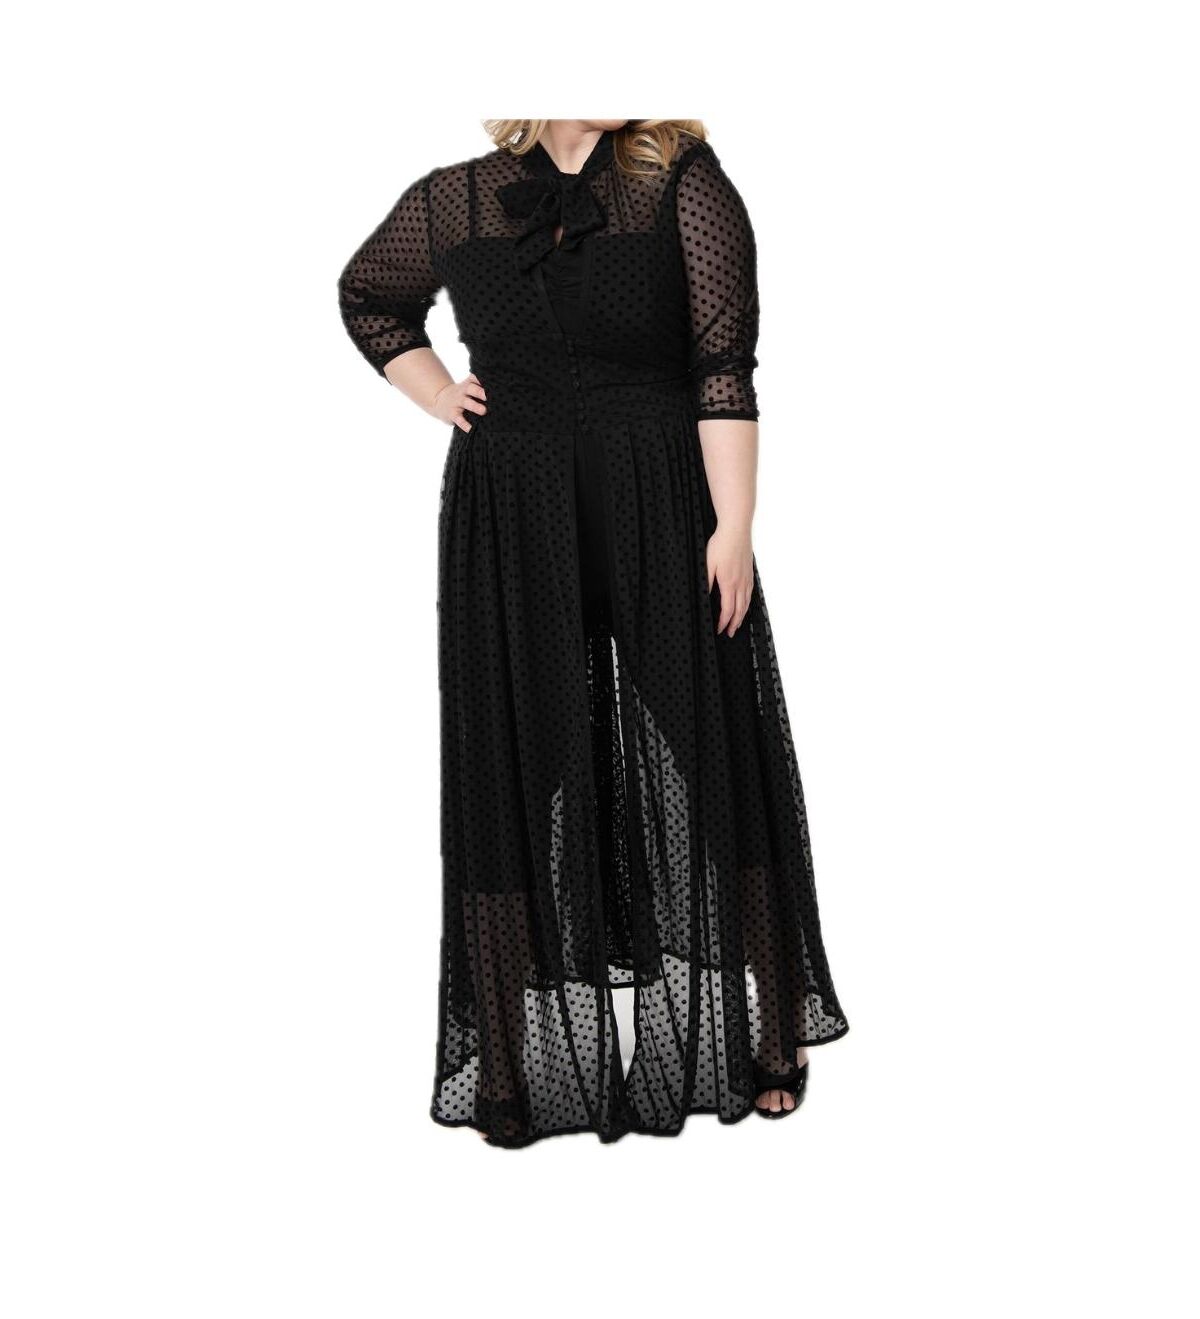 Unique Starlet Duster Dresses - Black swiss dot